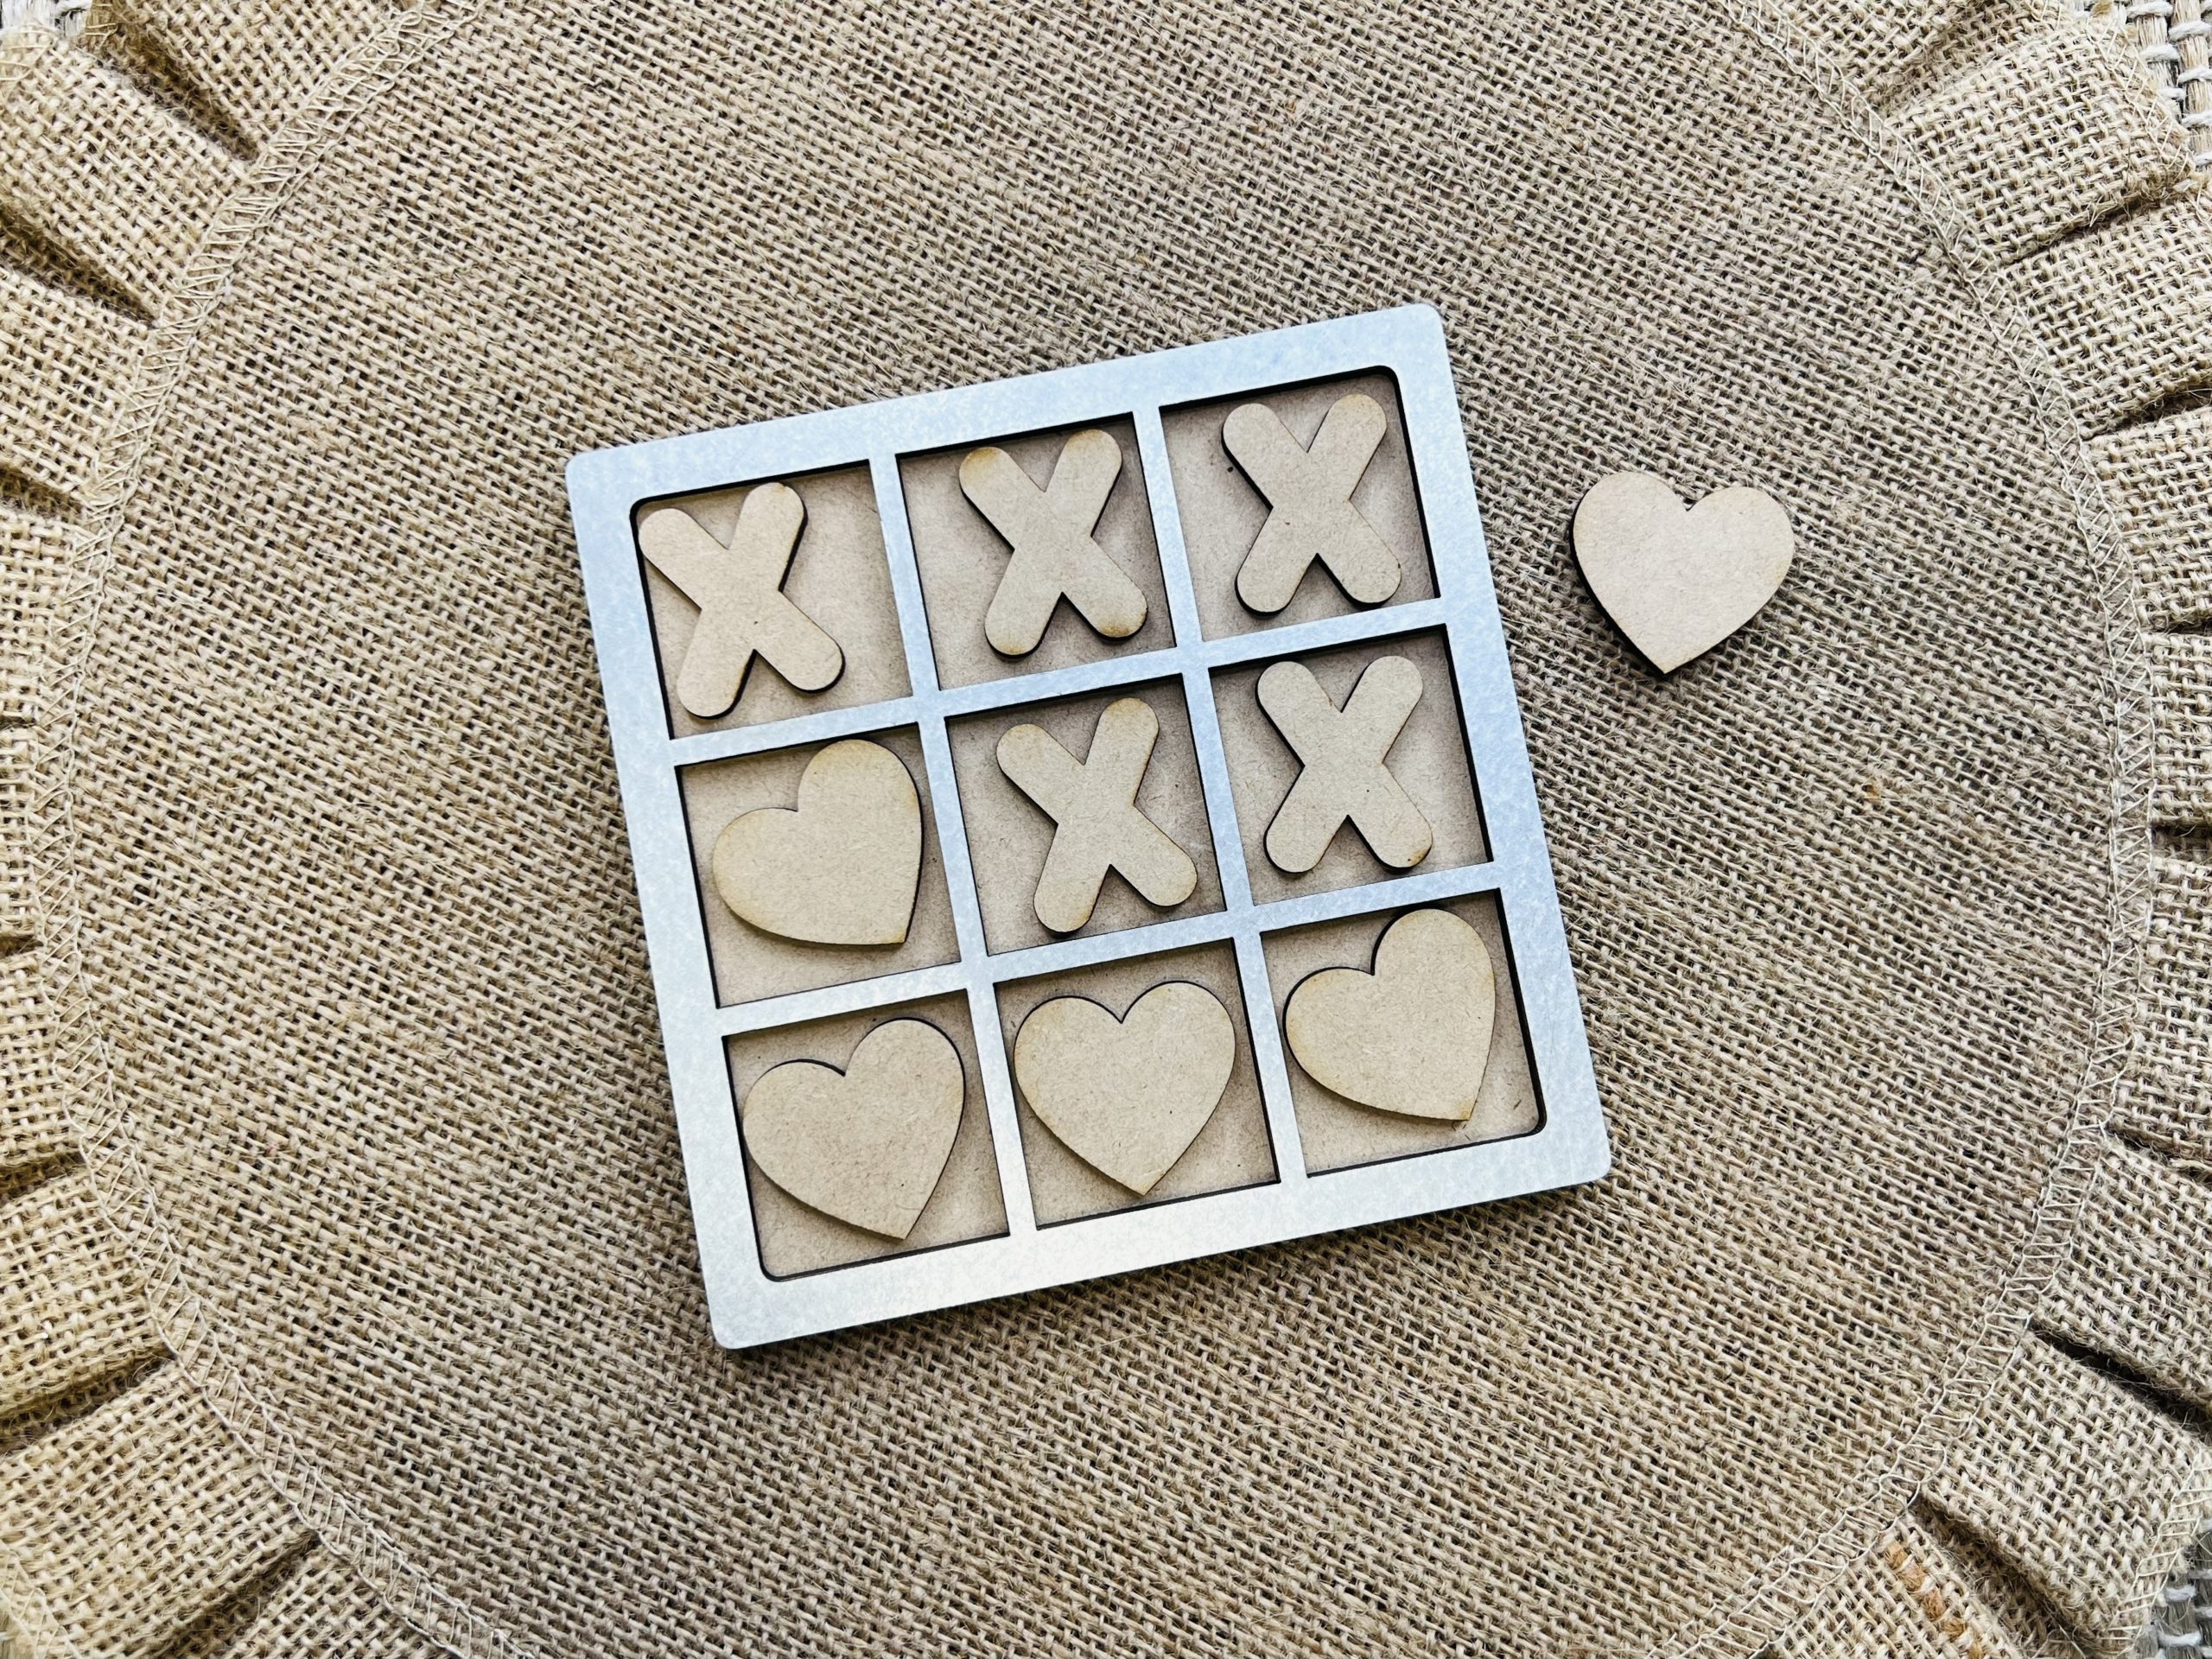 Valentines tic tac toe game wood cutout